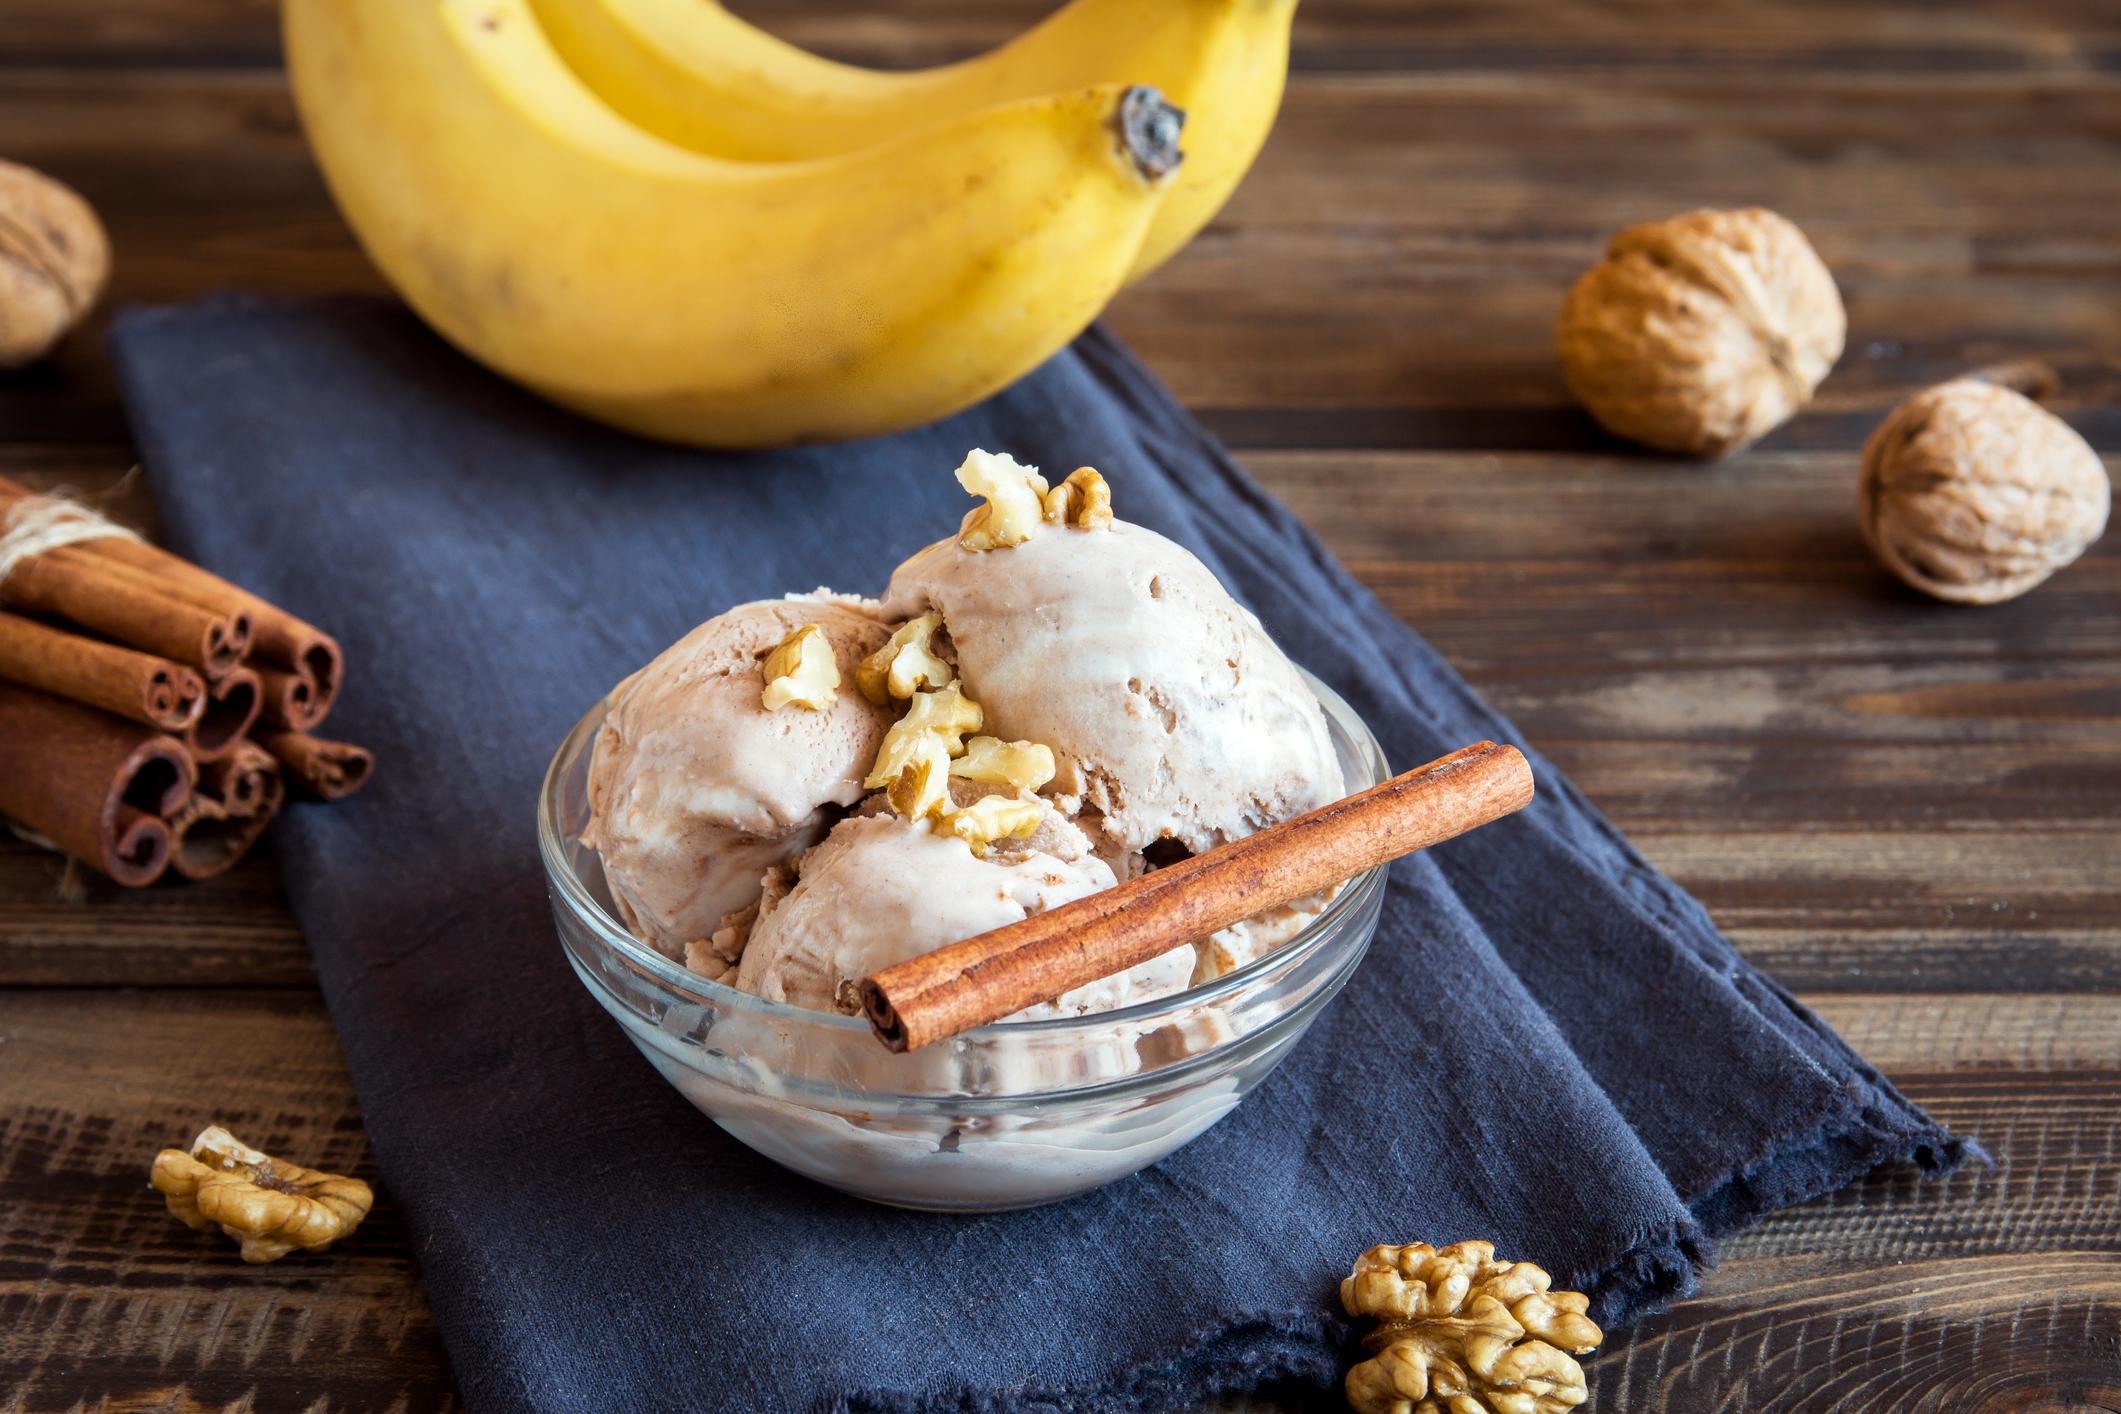 Healthy raw vegan banana and cinnamon ice cream (icecream, nicecream) with walnut topping - healthy vegetarian diet vegan raw fruit organic delicious dessert, dairy free, gluten free